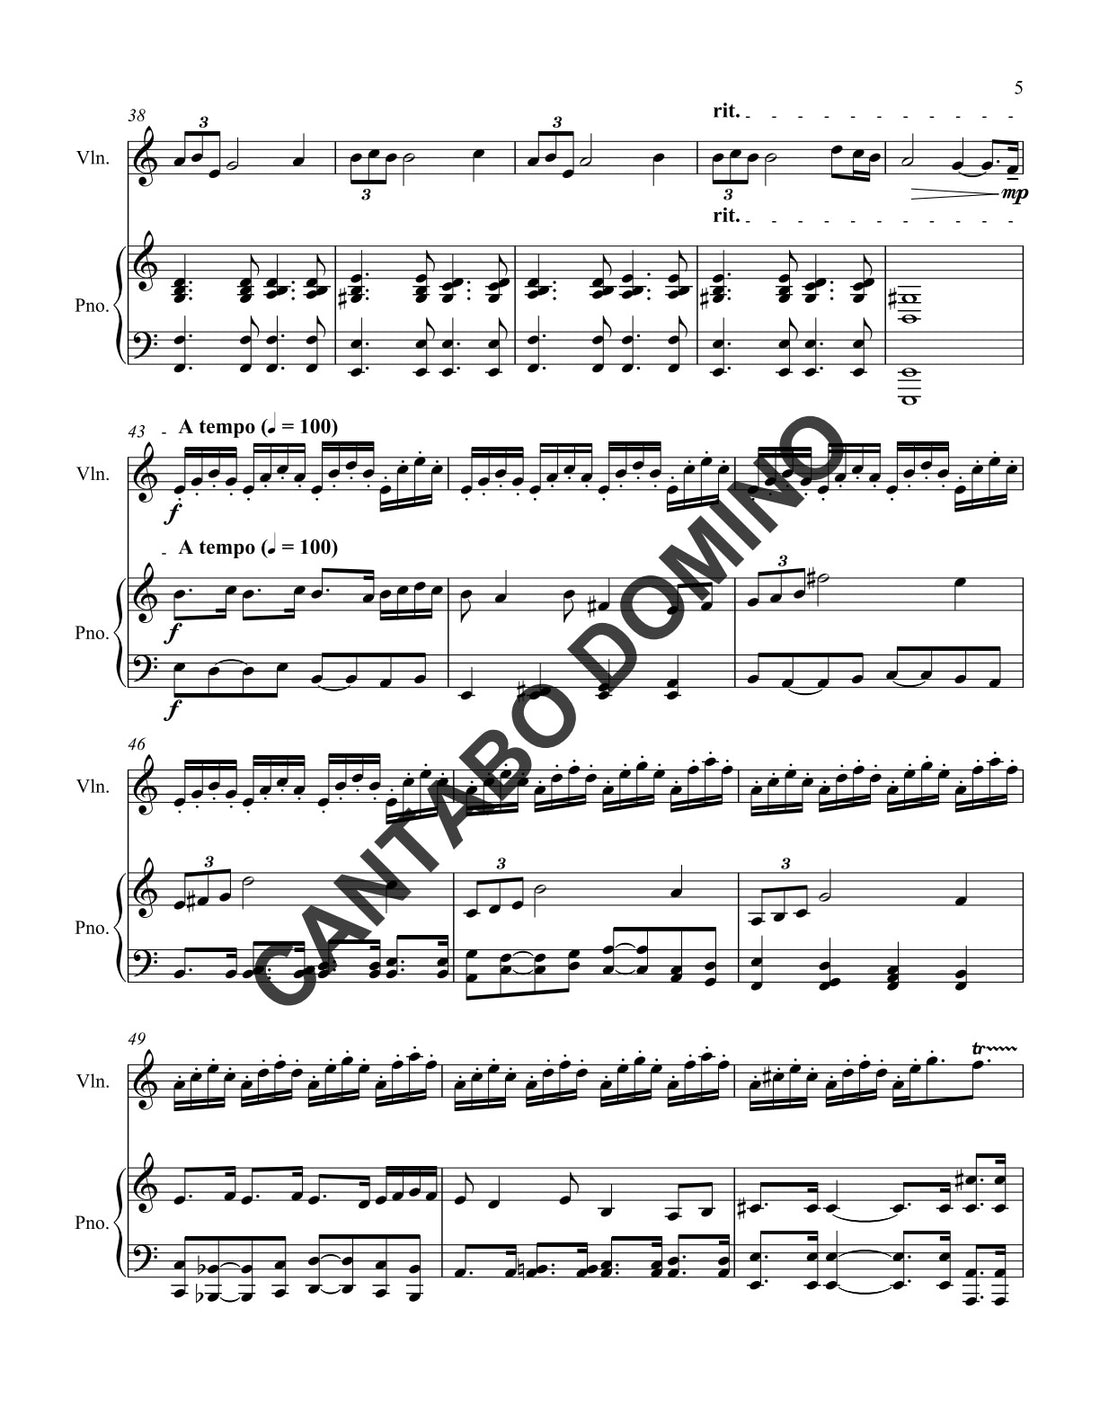 Violin Sonata "Descendit"